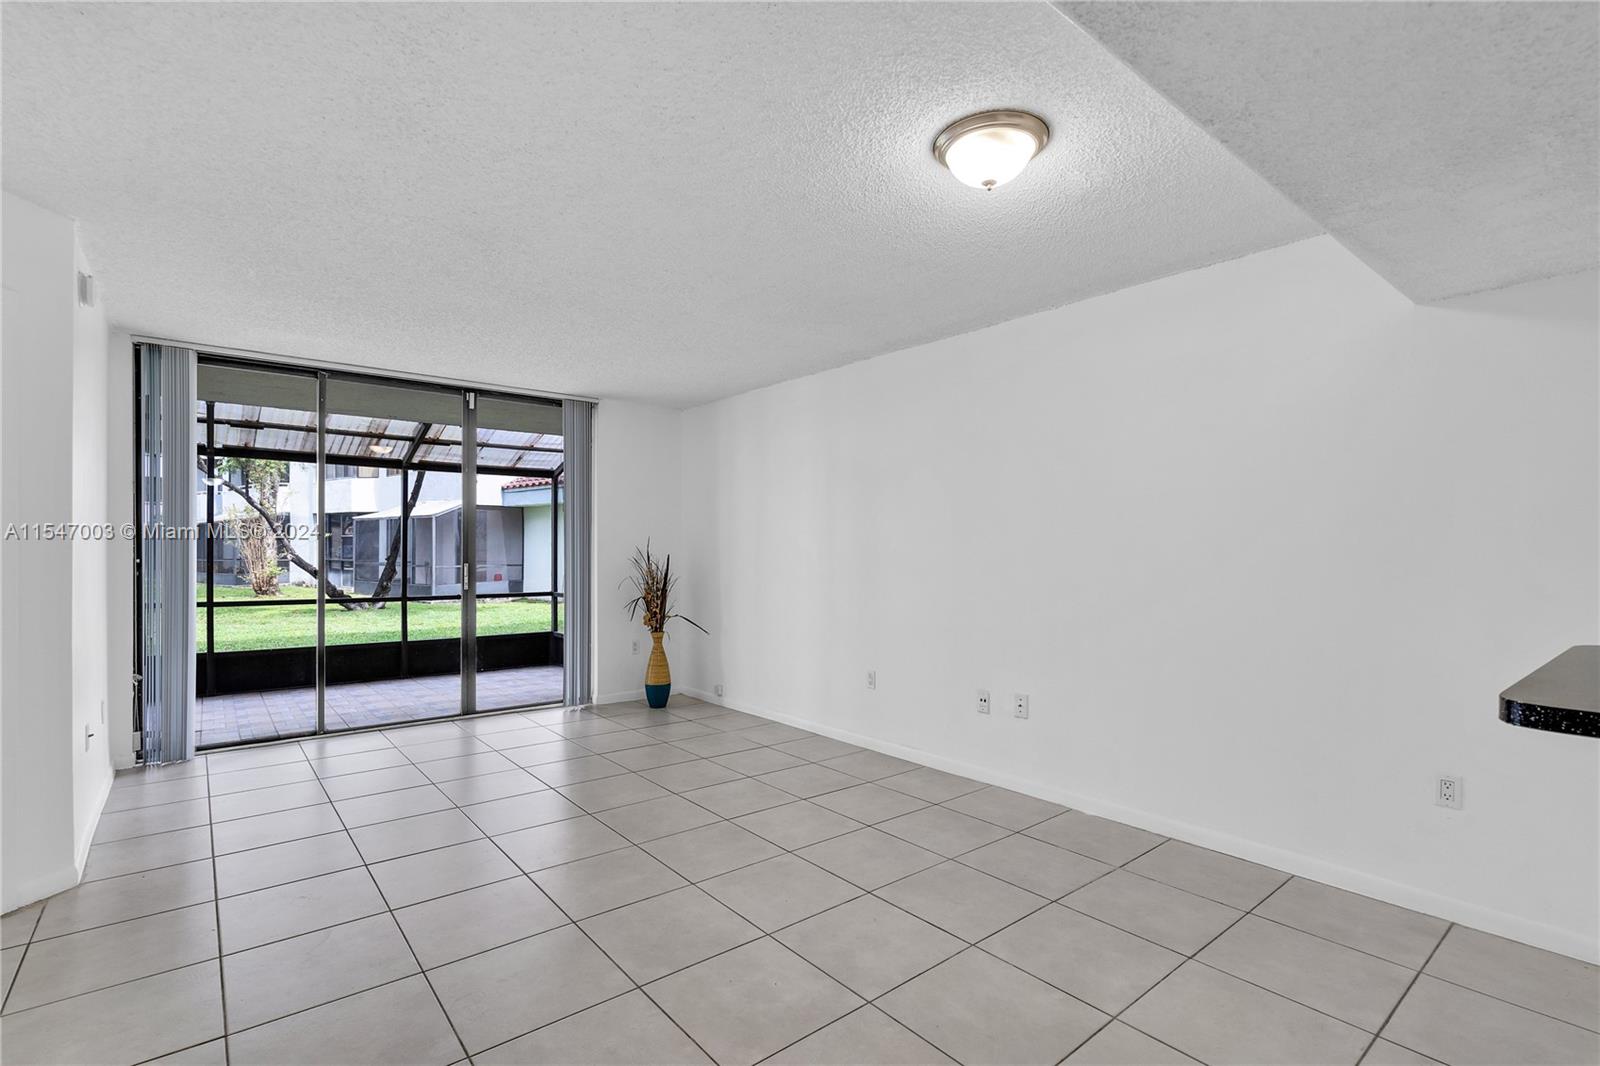 Rental Property at 8255 Sw 152nd Ave E-109, Miami, Broward County, Florida - Bedrooms: 2 
Bathrooms: 1  - $2,250 MO.